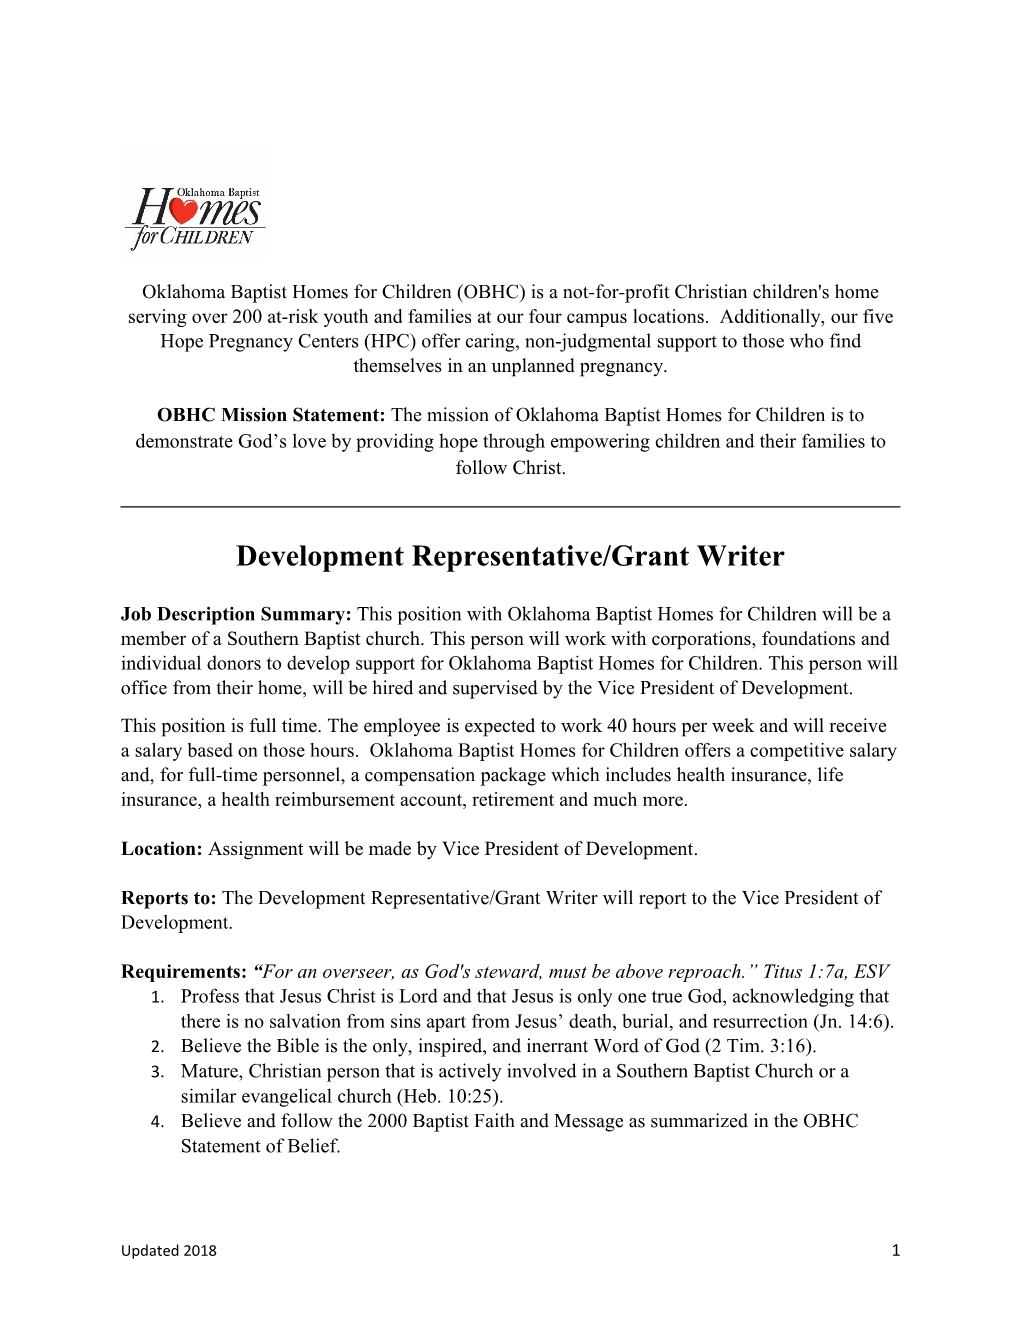 Development Representative/Grant Writer